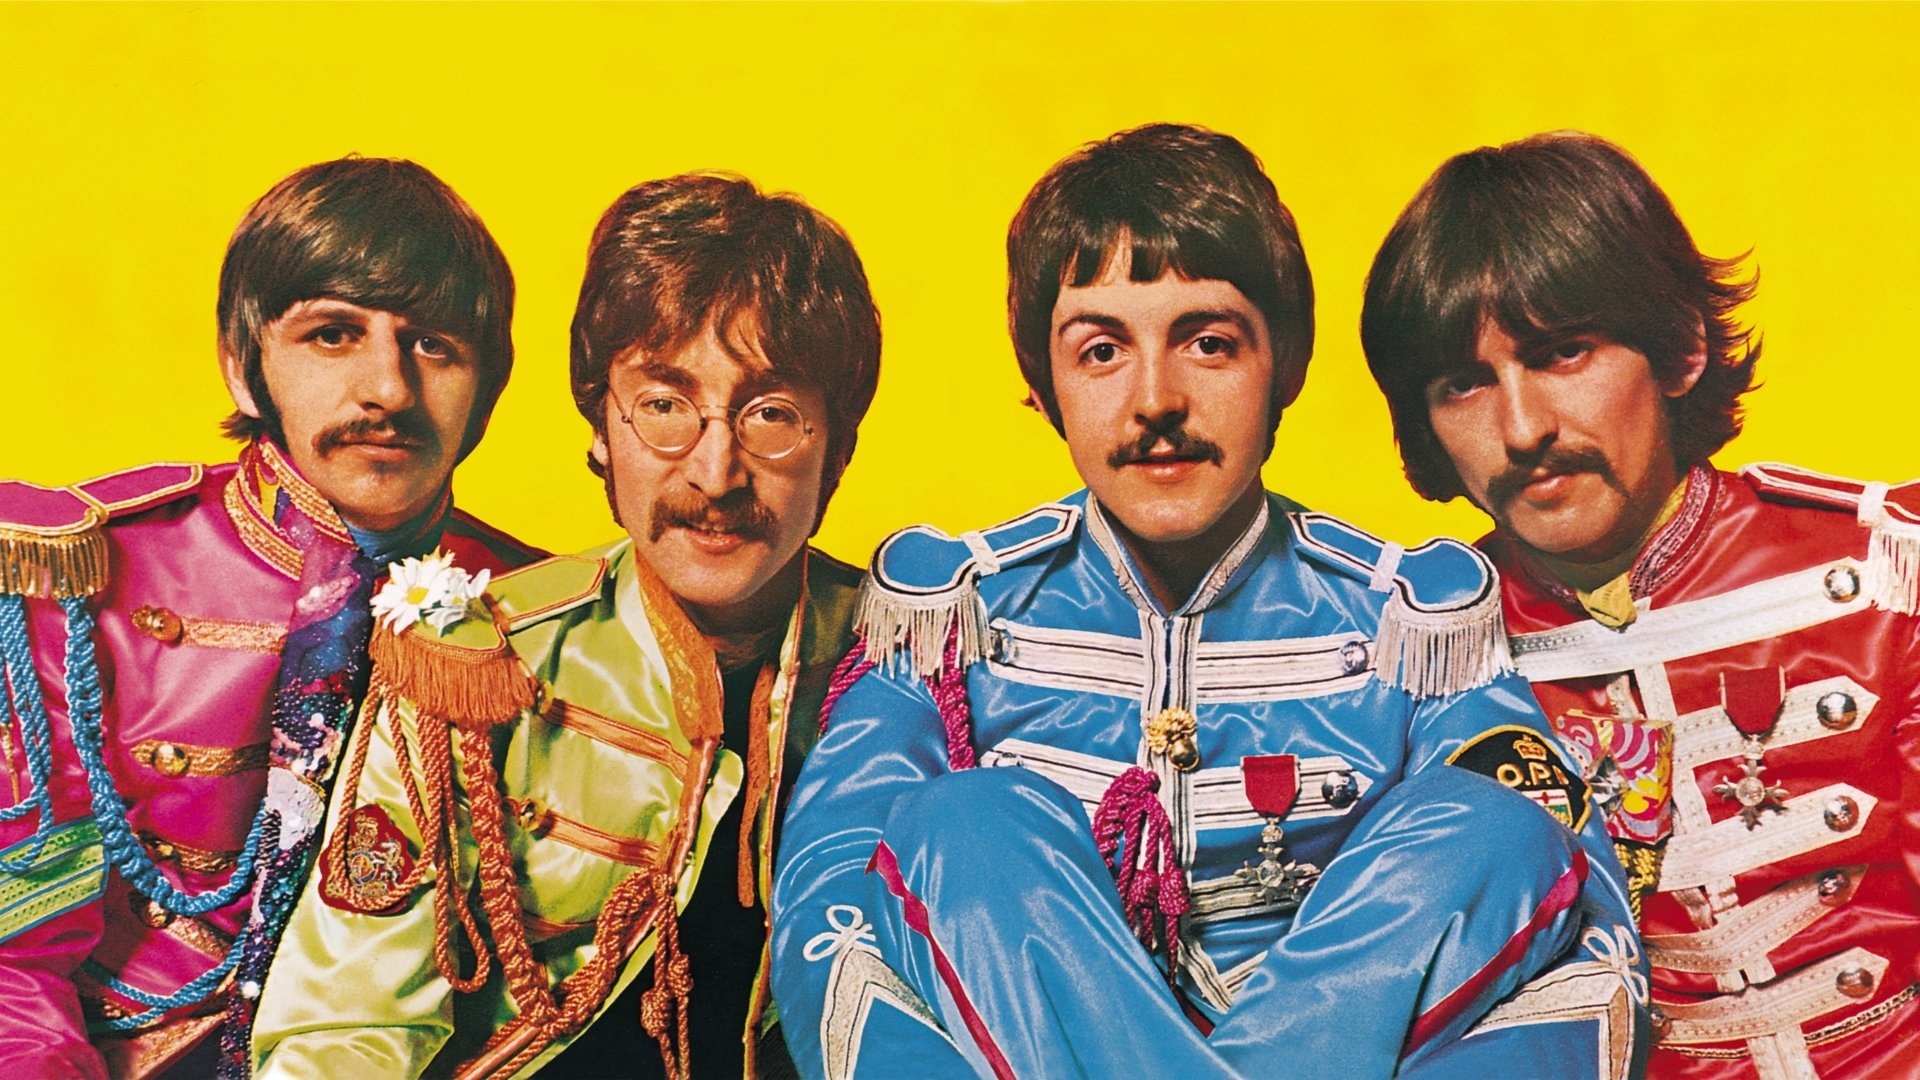 The Beatles, High-definition wallpaper, Captivating image, Striking visuals, 1920x1080 Full HD Desktop